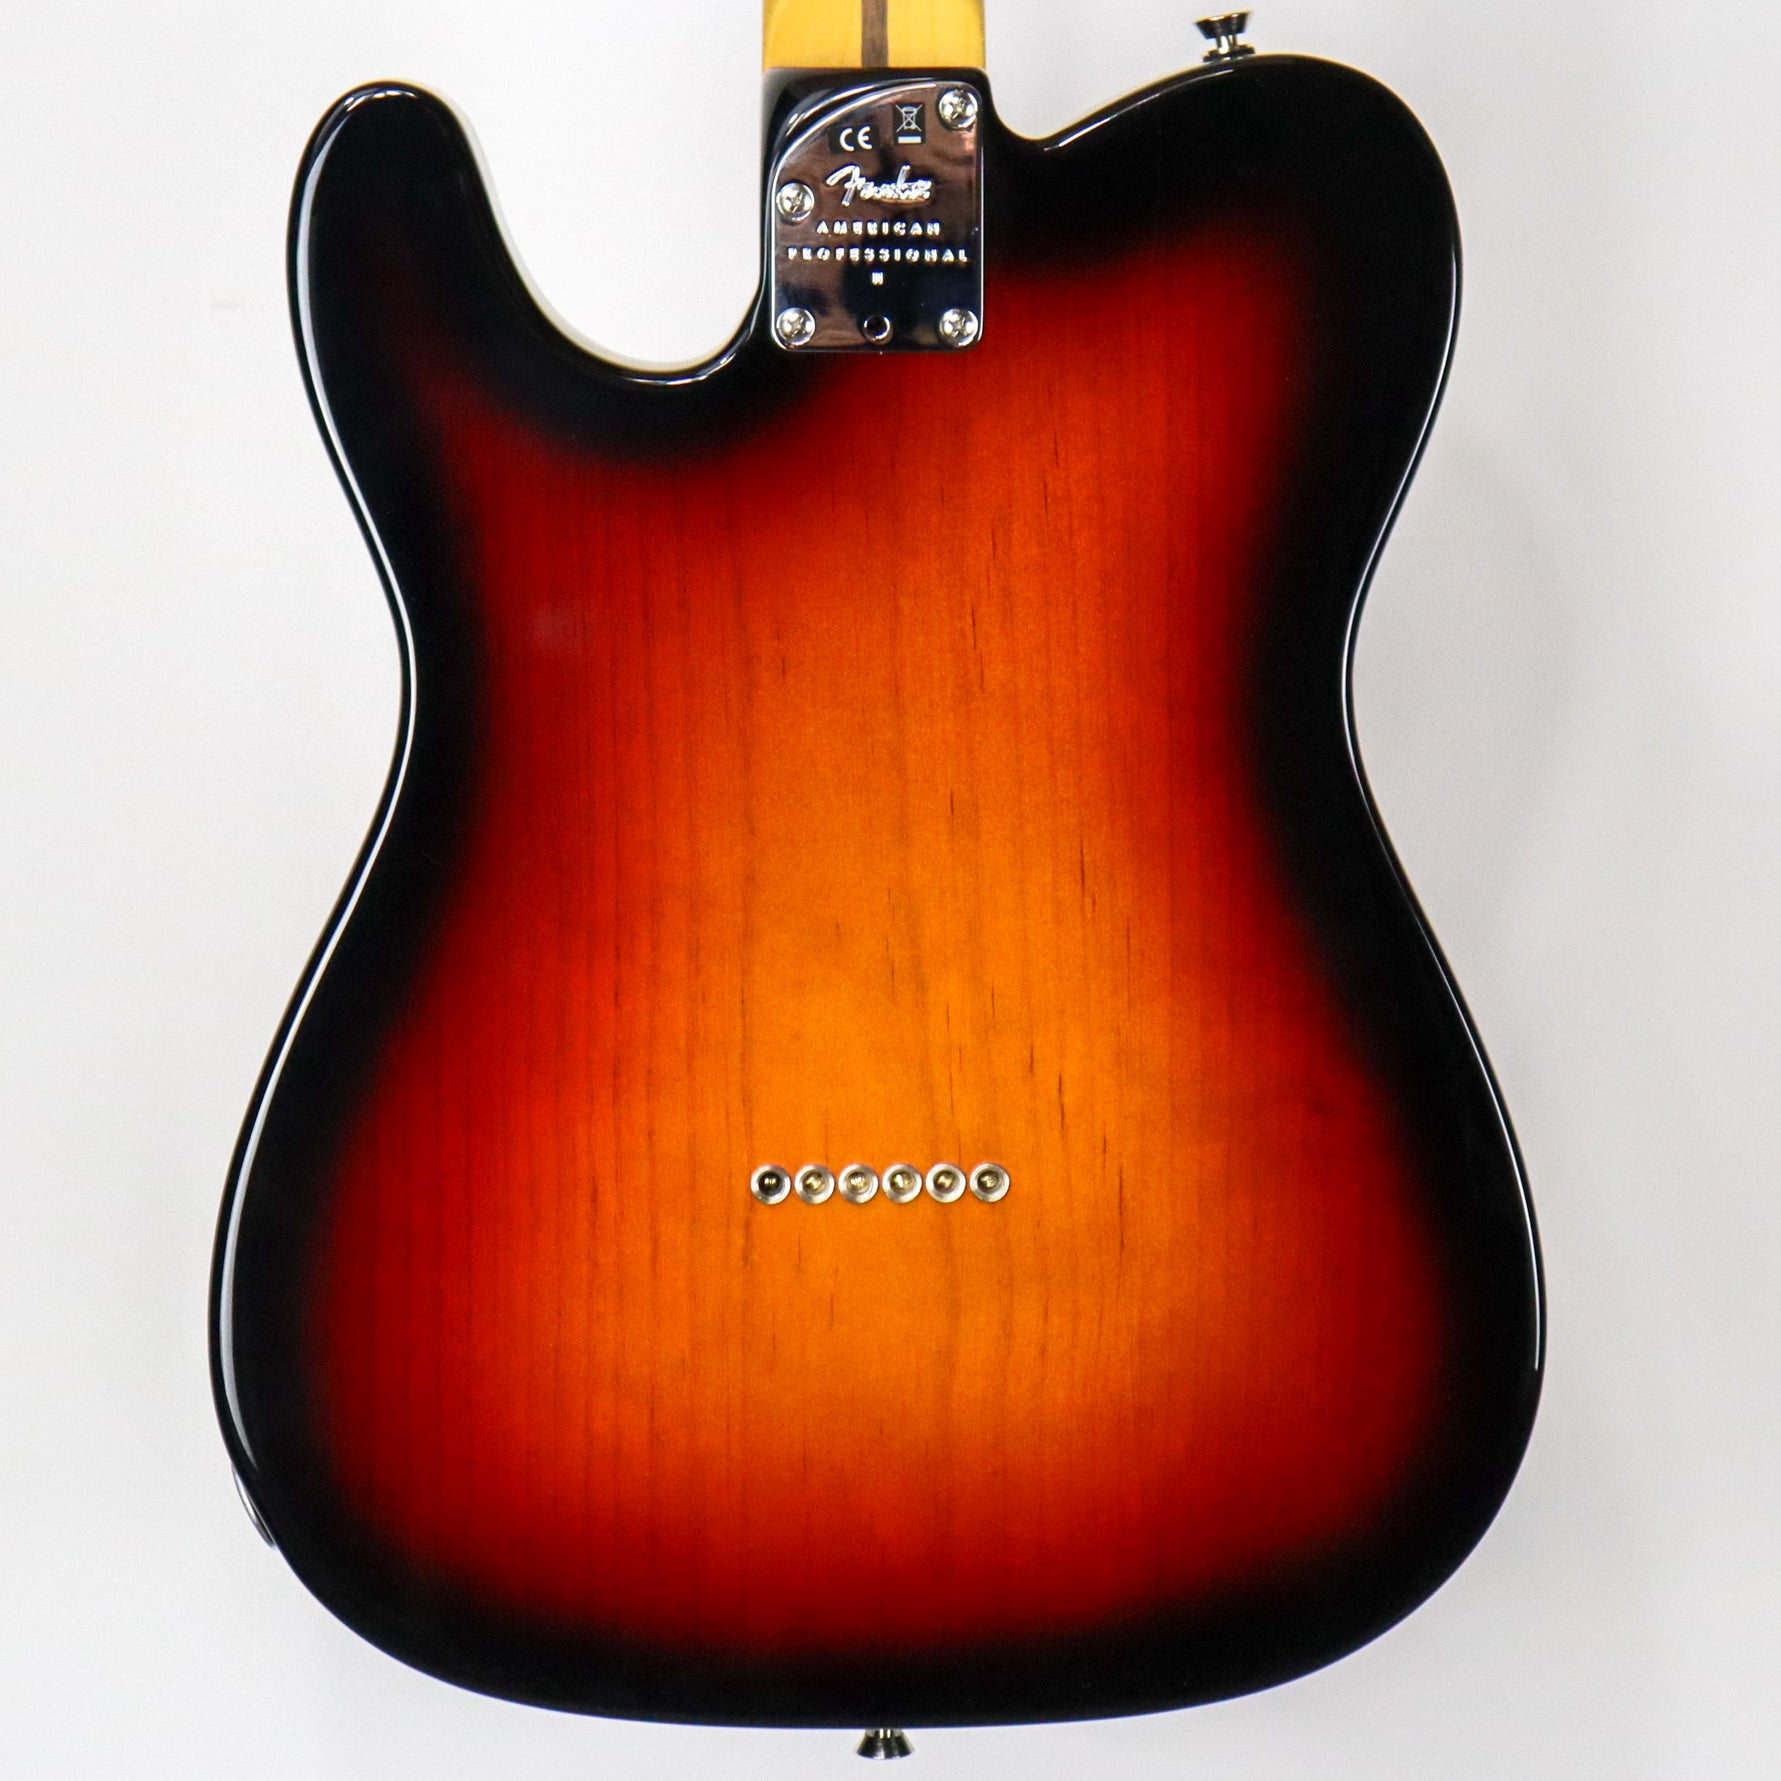 Fender American Professional II Telecaster 3 Tone Sunburst, Maple Neck